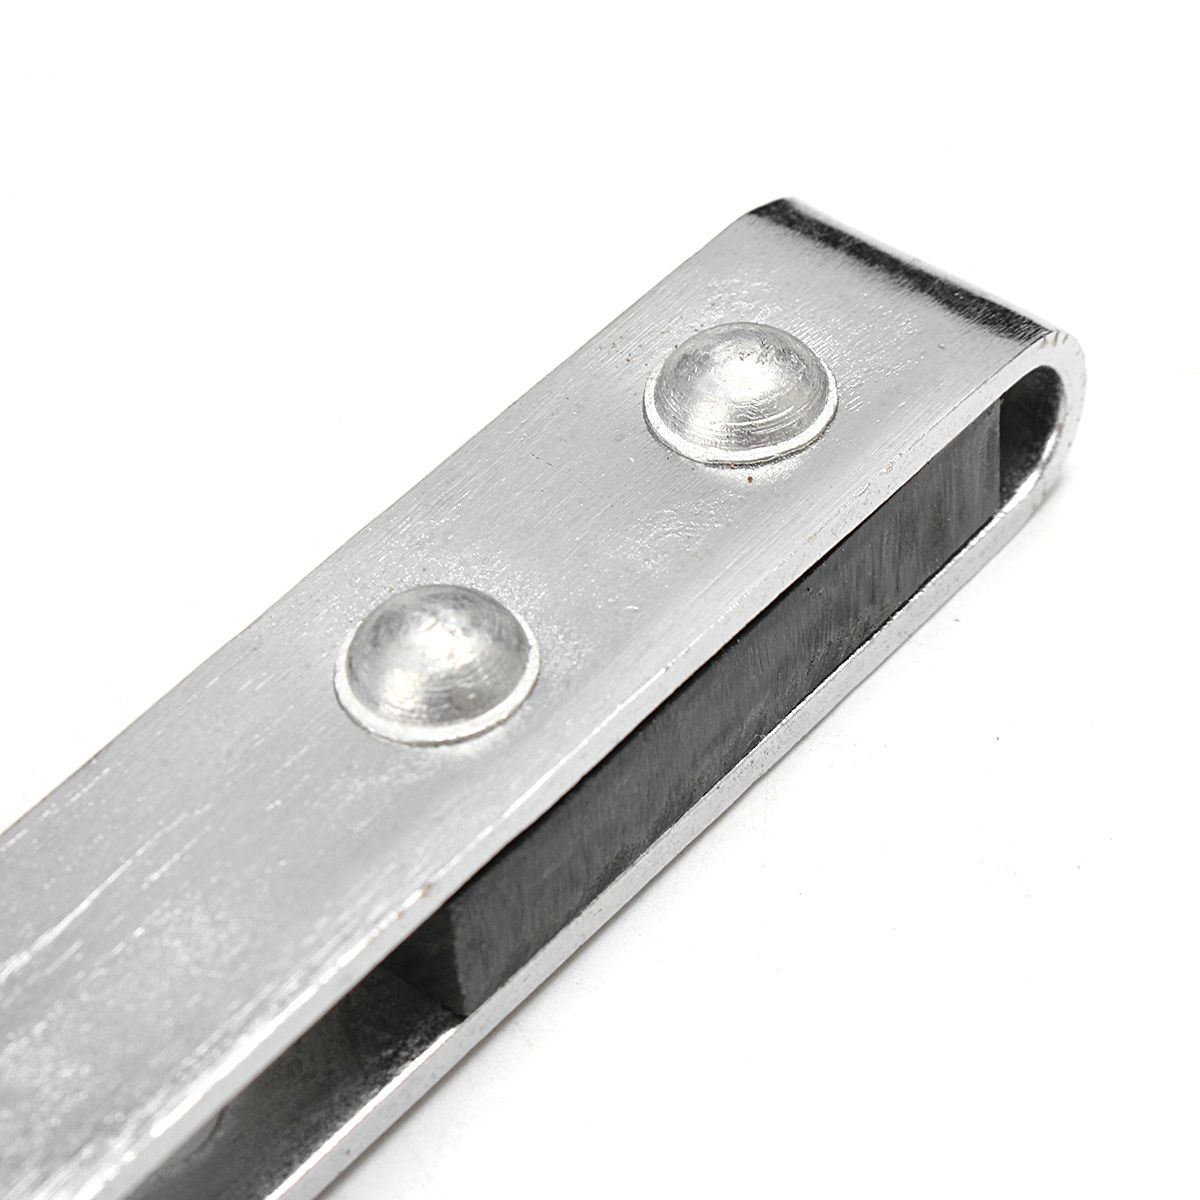 Steel-U-Bar-Floor-Layer-Scriber-with-Locking-Nut-for-PVC-Rubber-Flooring-1109879